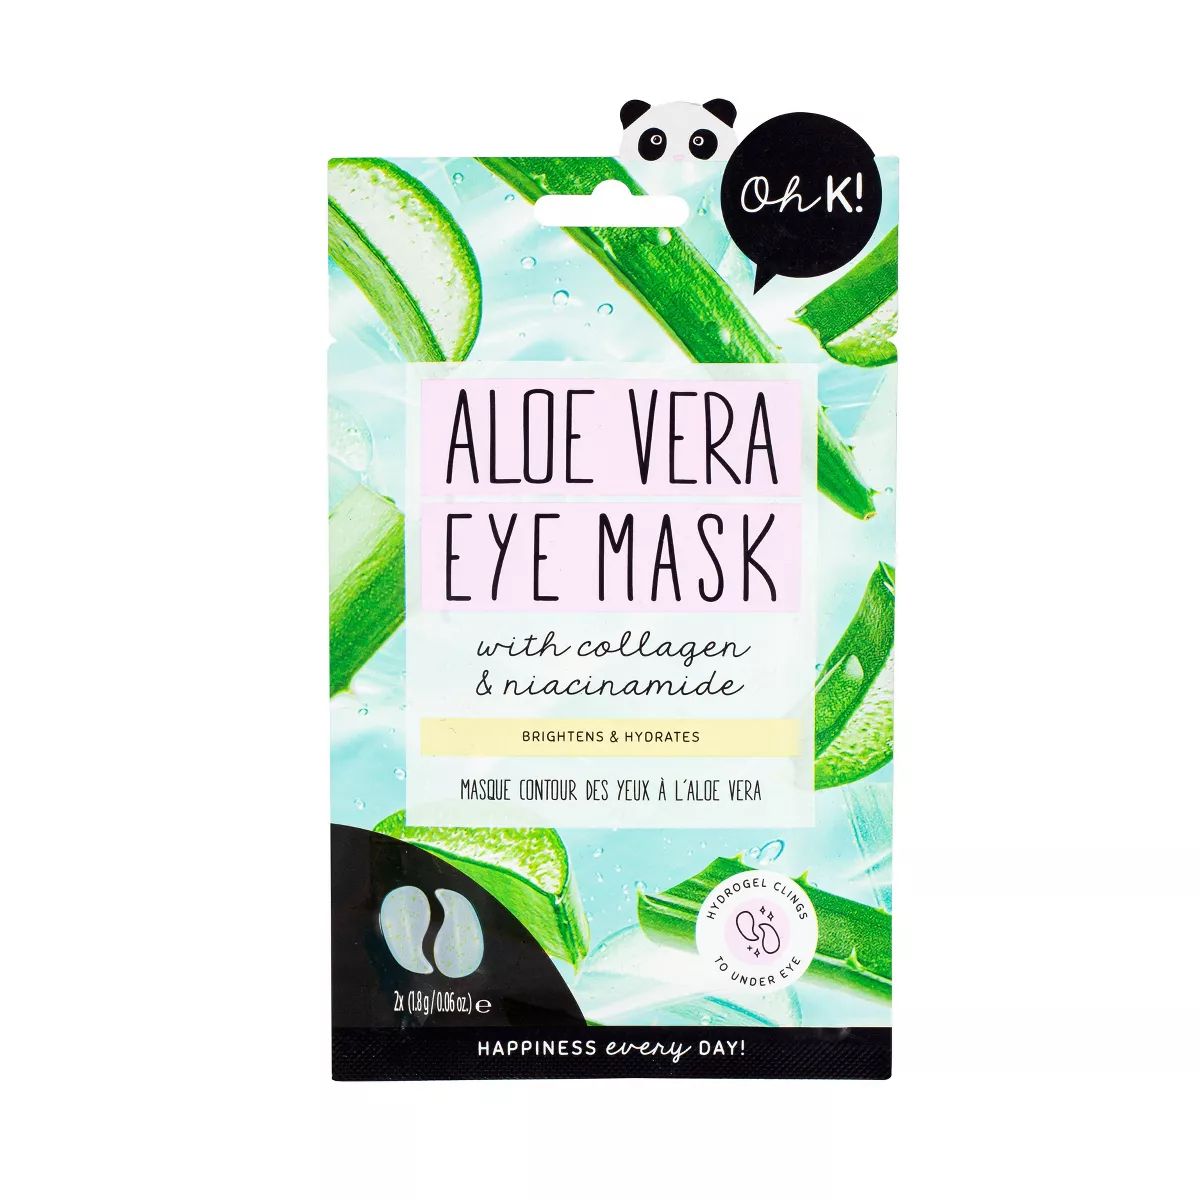 Oh K! Aloe Vera with Collagen & Niacinamide Eye Mask - 0.84 fl oz | Target